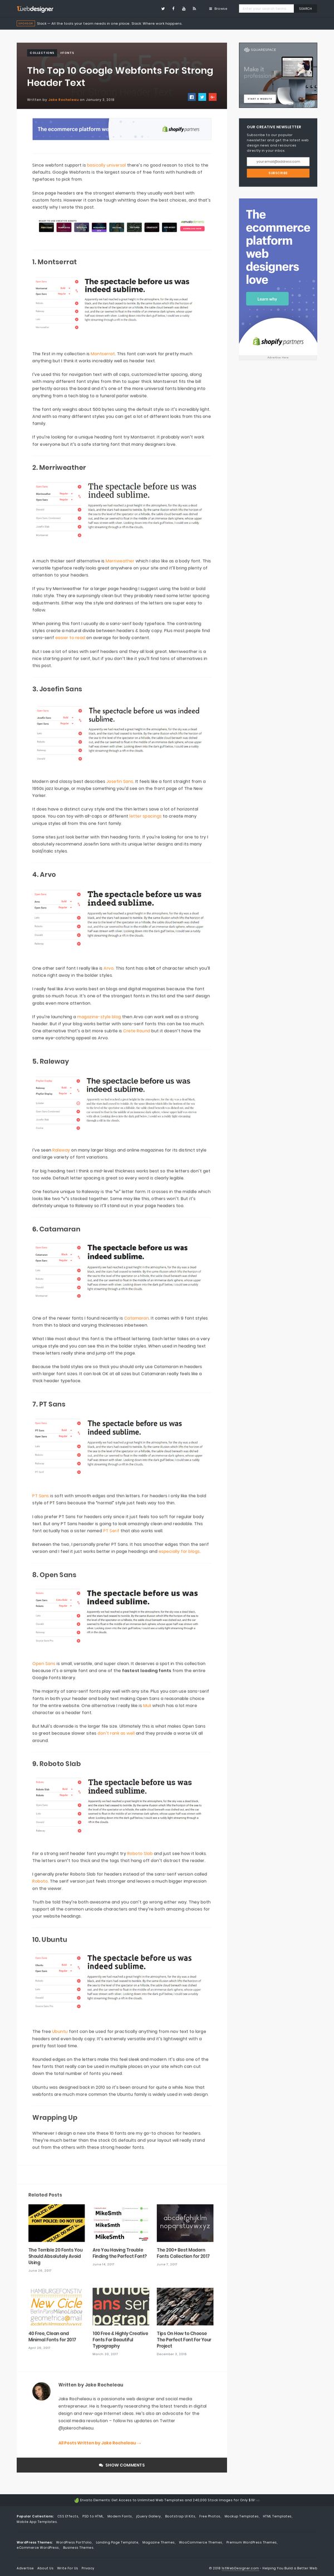 1stwebdesigner.com/top-google-webfonts-header-text/